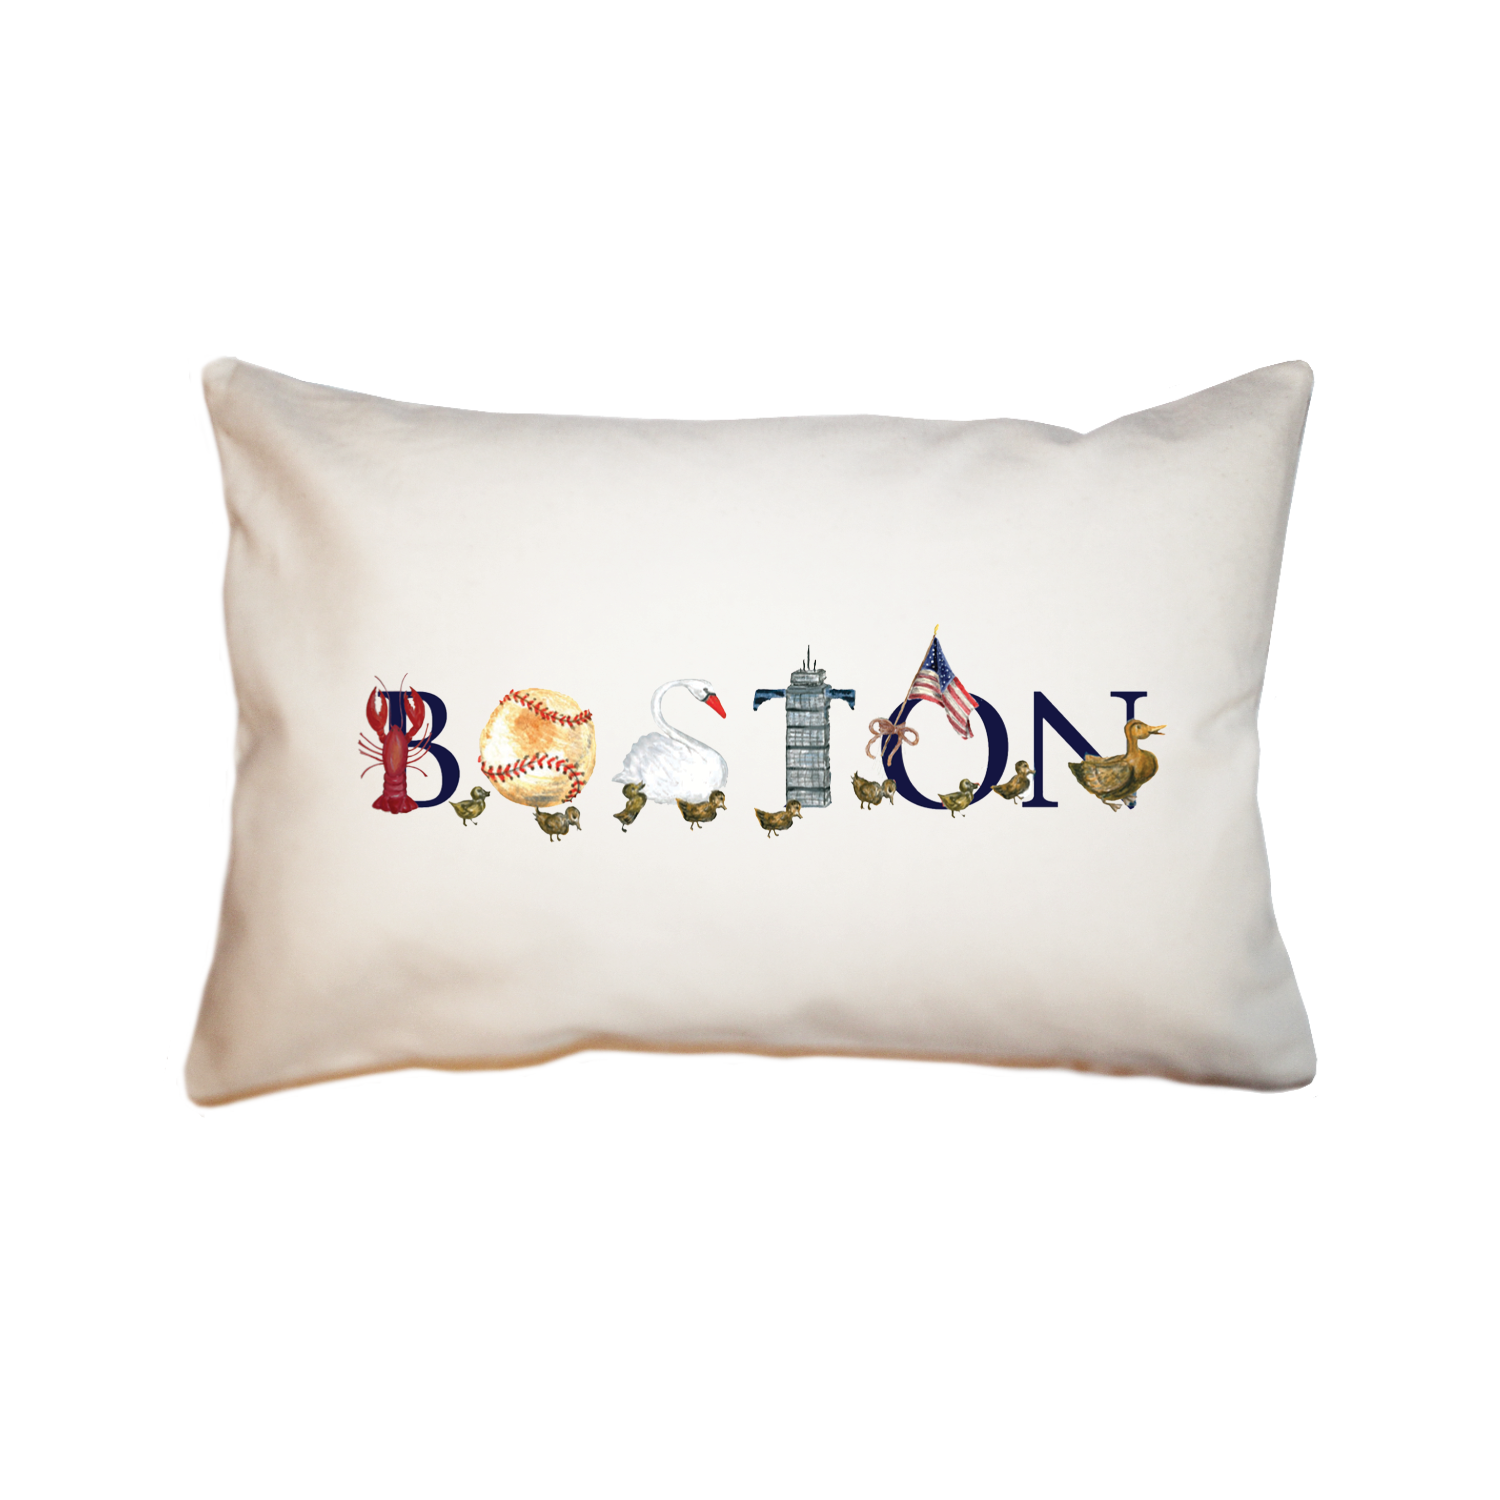 Boston large rectangle pillow